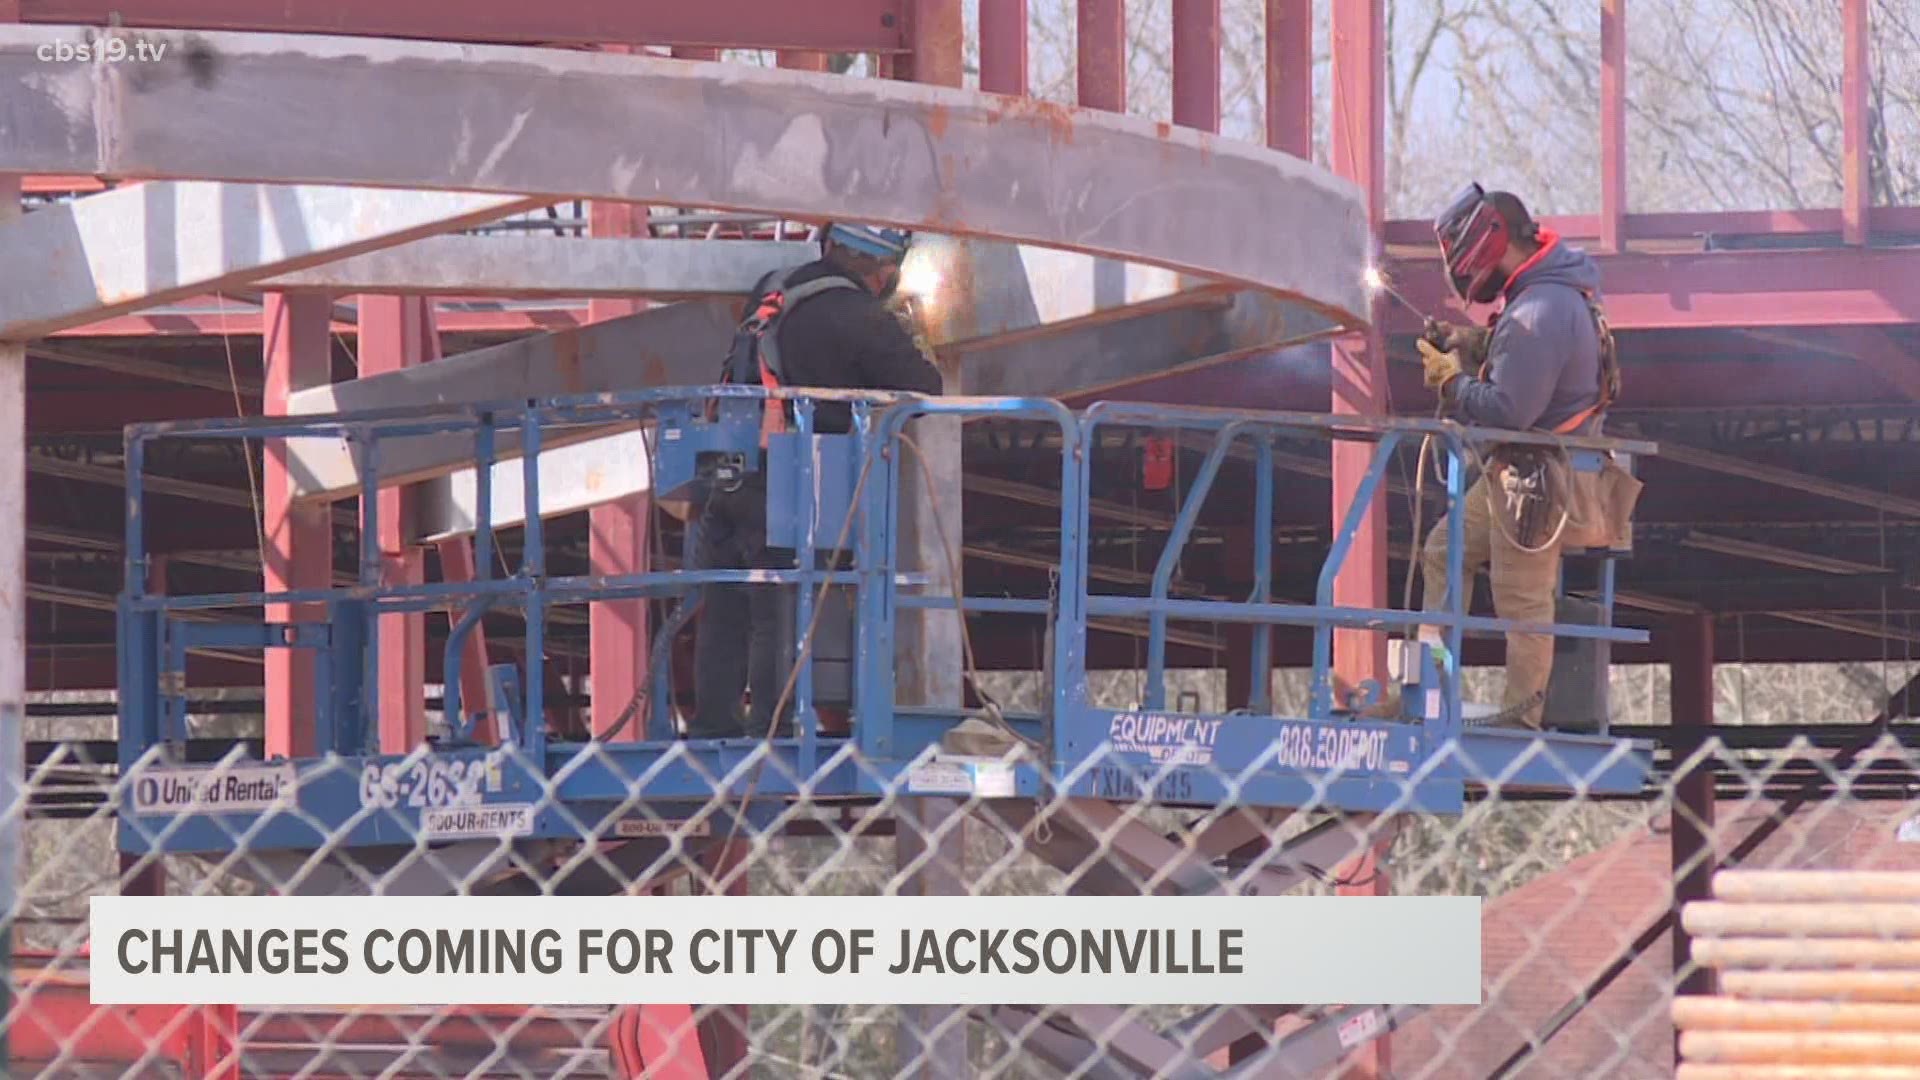 Jacksonville construction includes public works, new businesses cbs19.tv